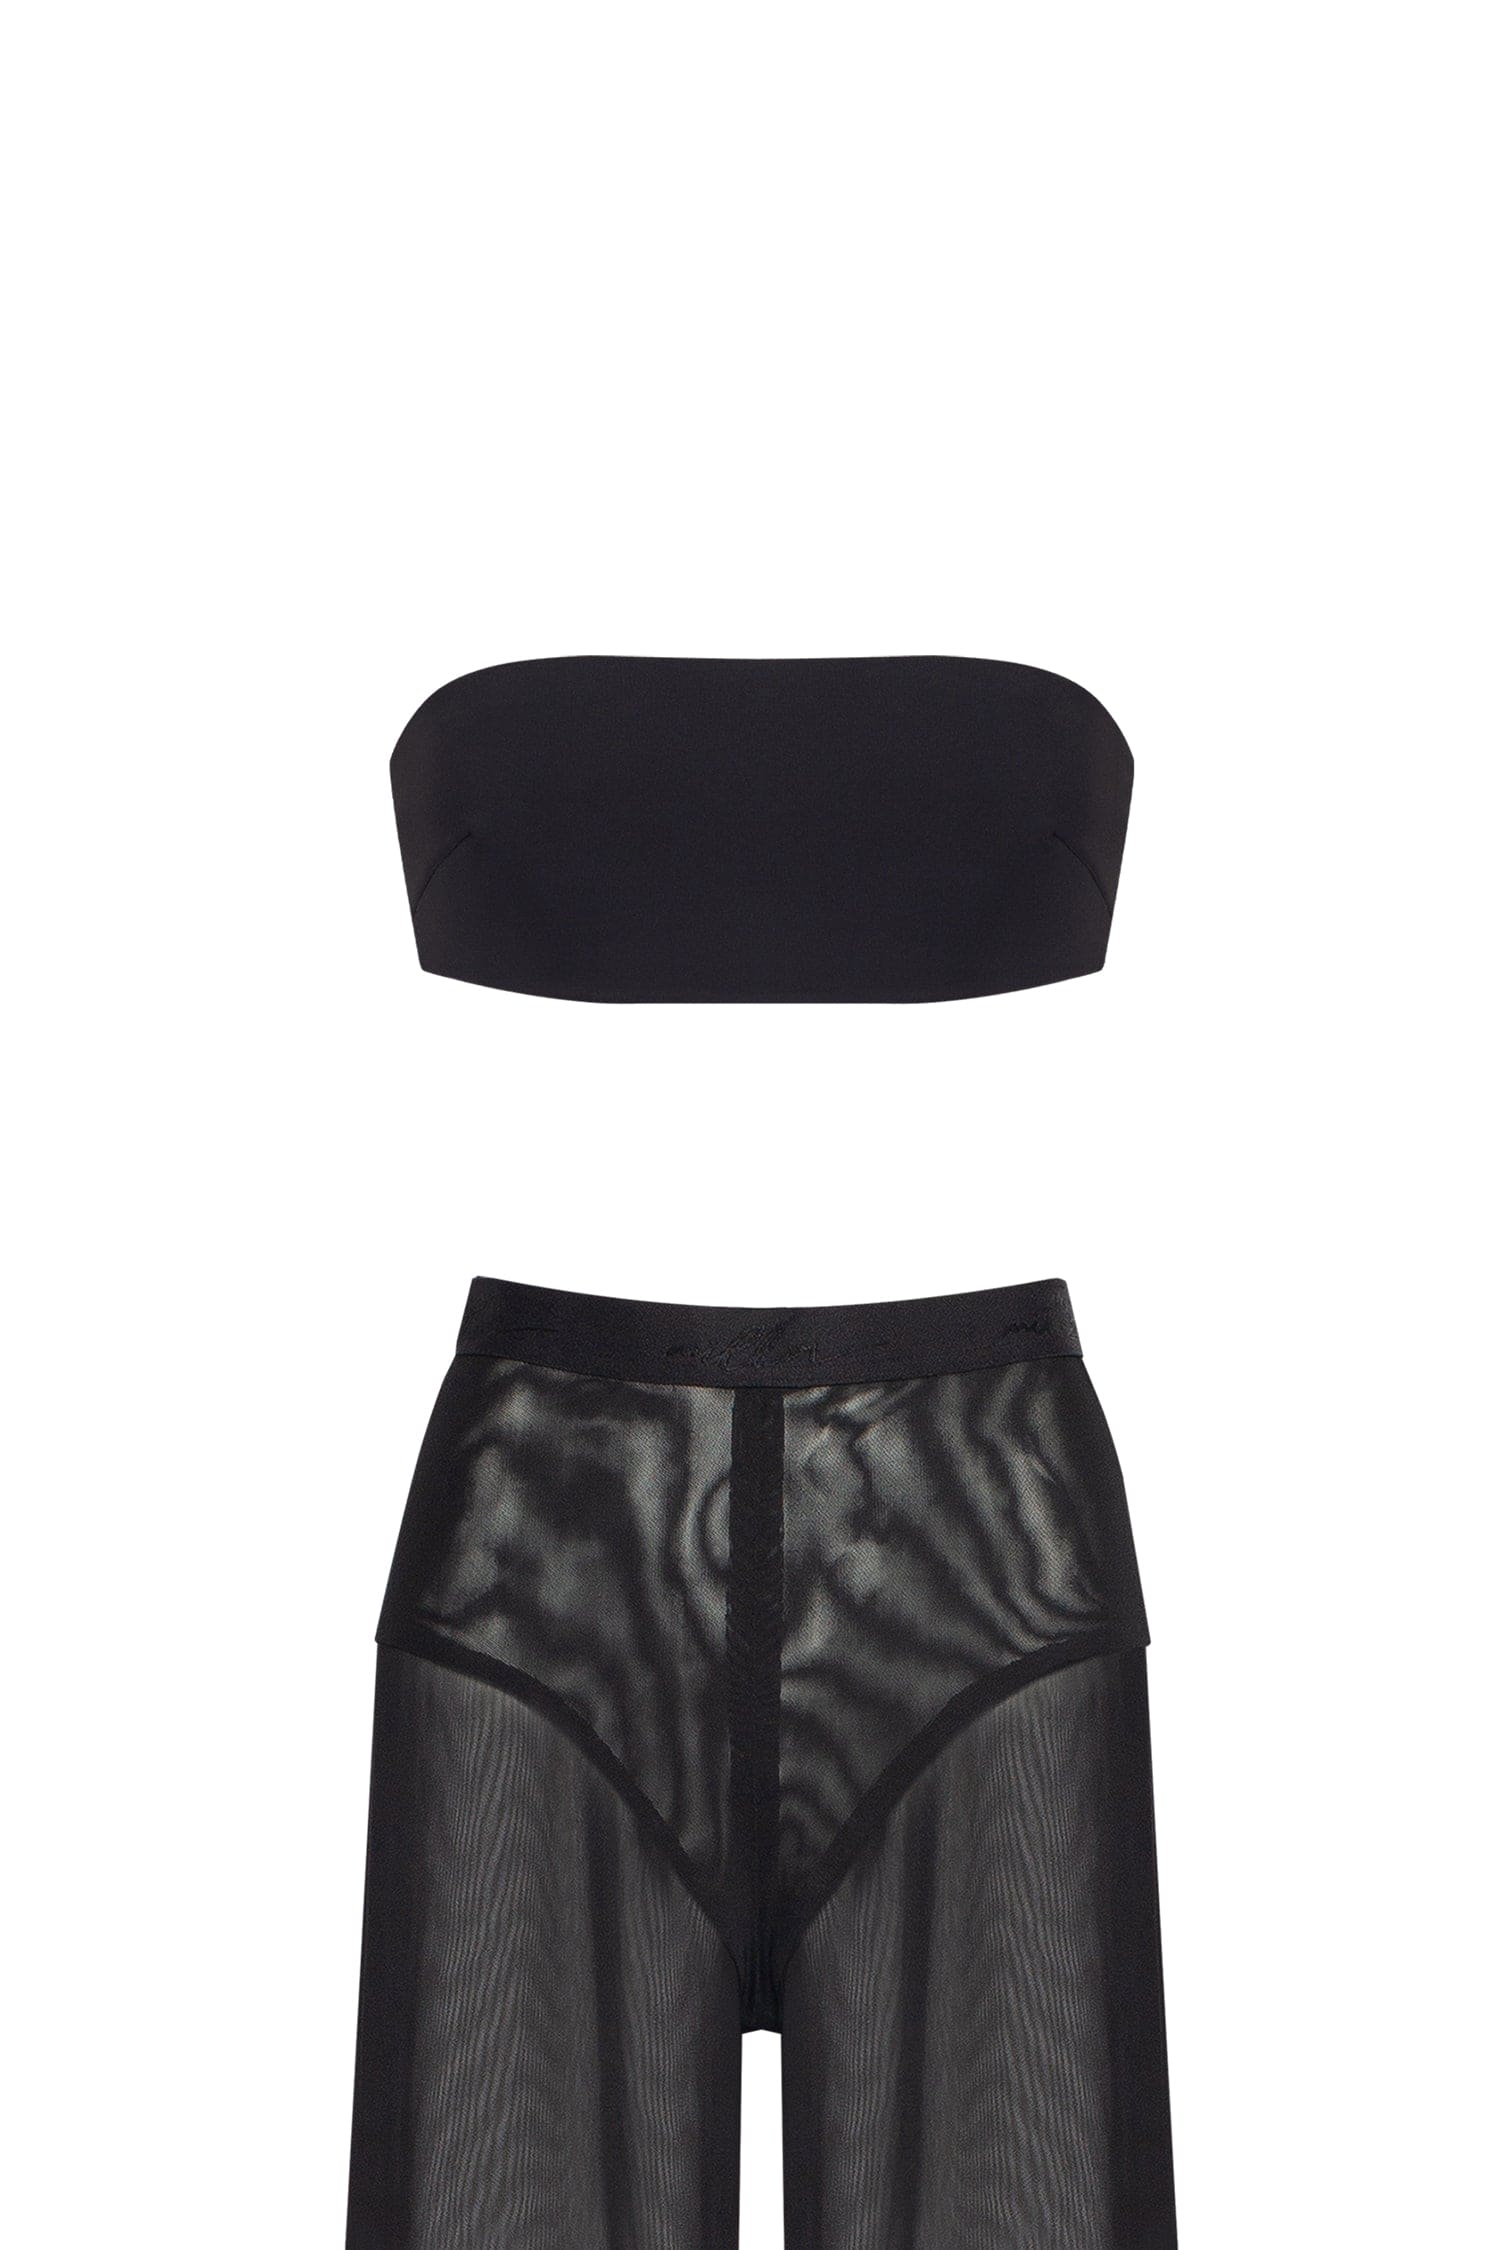 MS Sheer Bandeau & Tie Side Skirt Co Ord